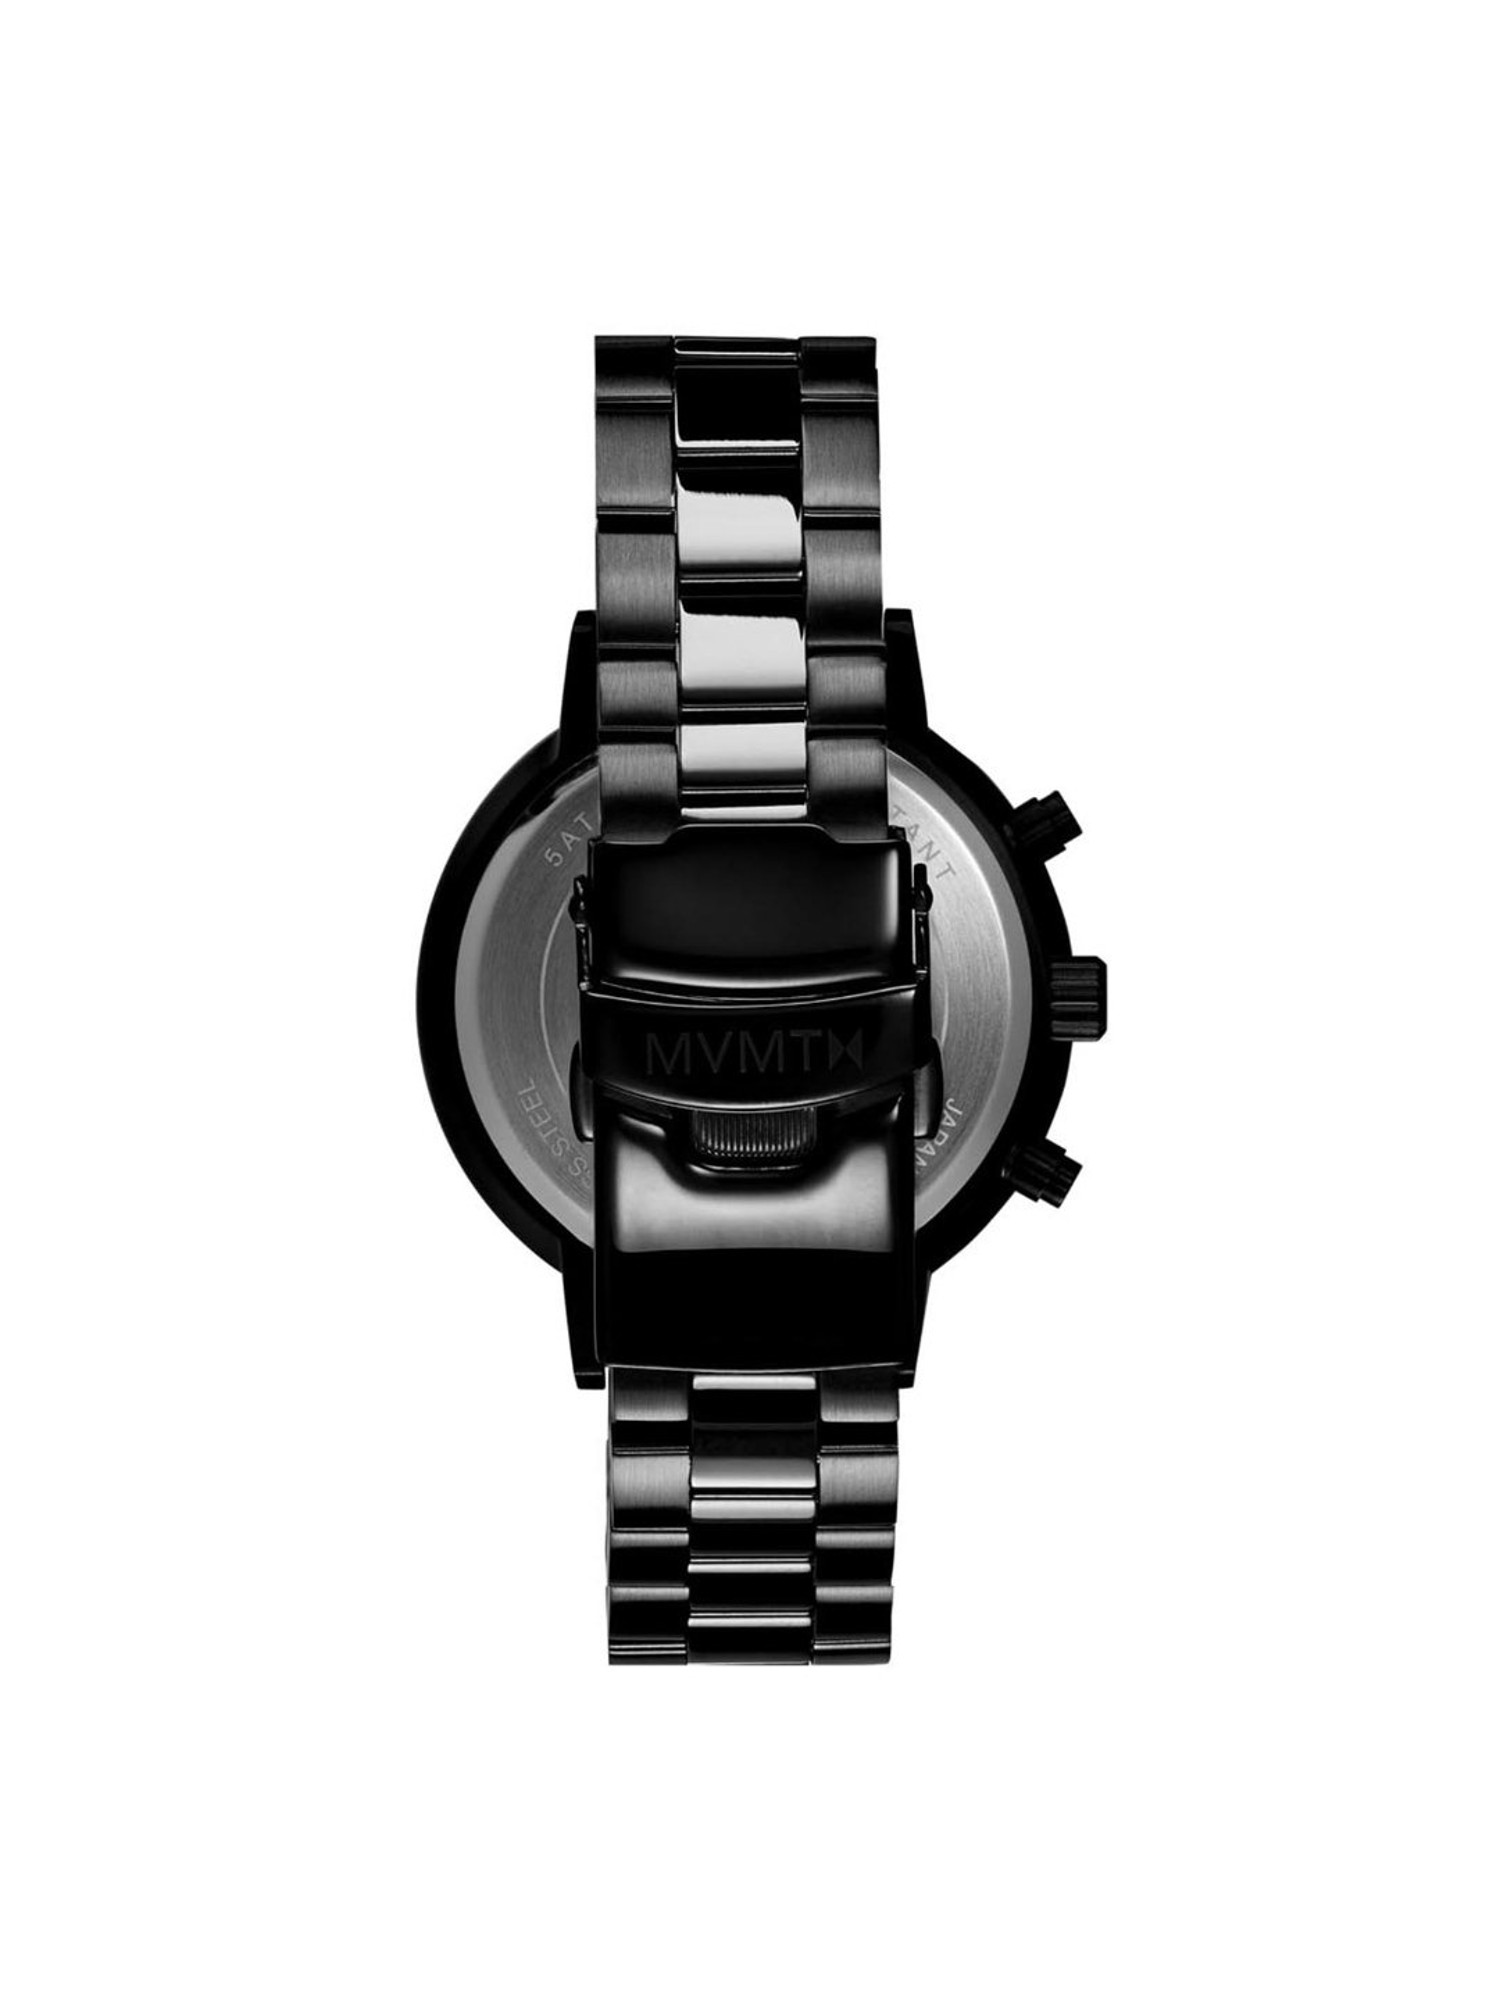 Chronograph Tata Price Best @ 28000055-D MVMT for Watch Buy at Caviar CLiQ Women